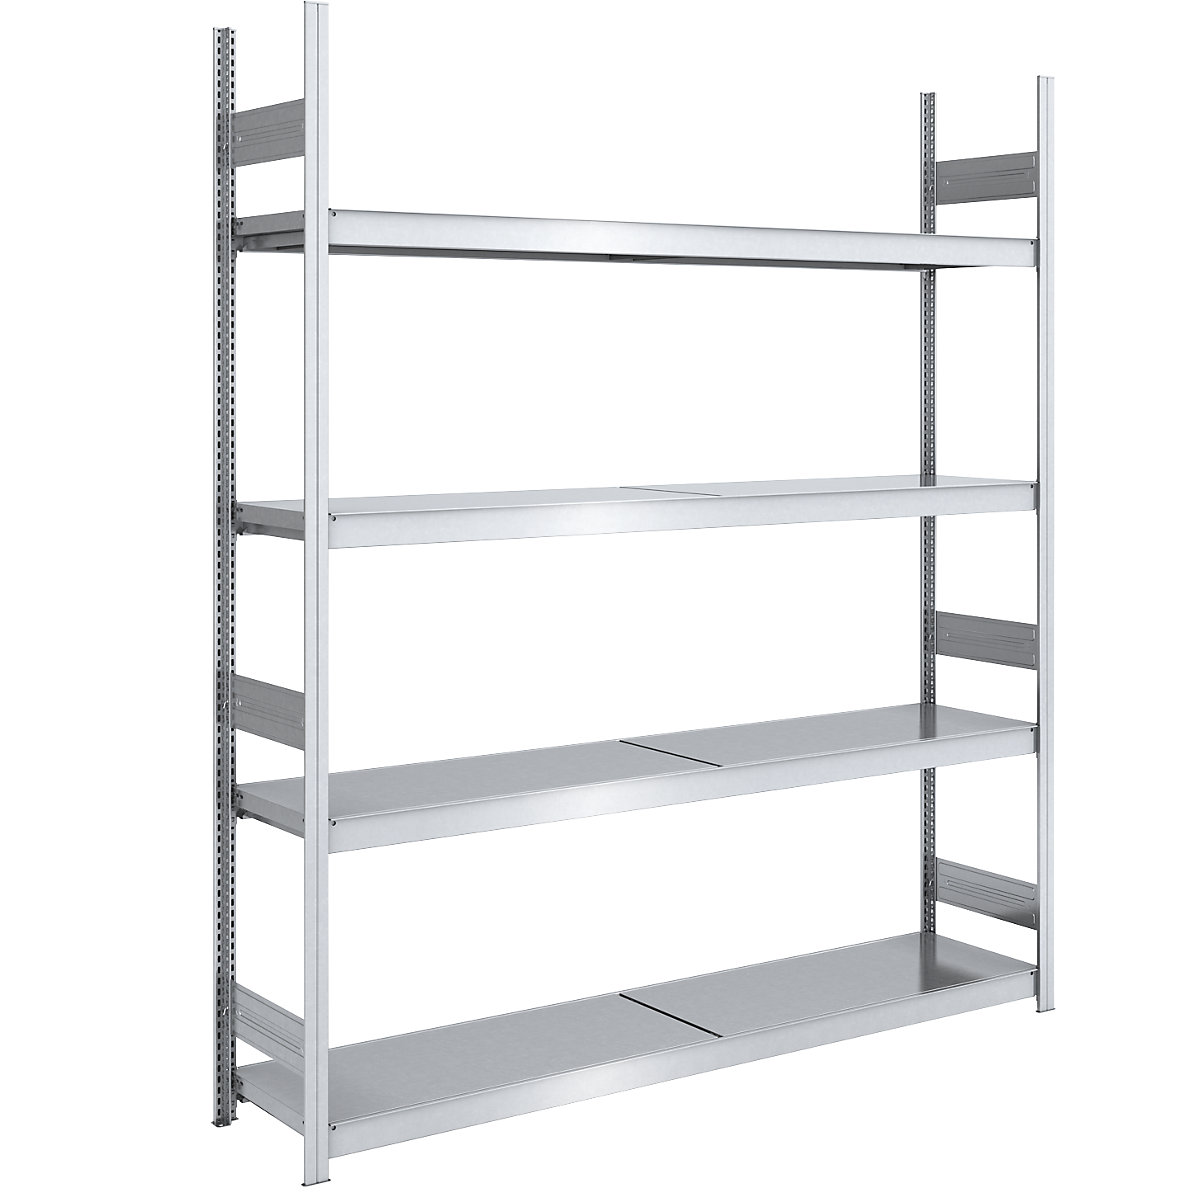 Wide span boltless shelving unit with steel shelves – hofe, height 2500 mm, shelf width 2000 mm, shelf depth 500 mm, standard shelf unit